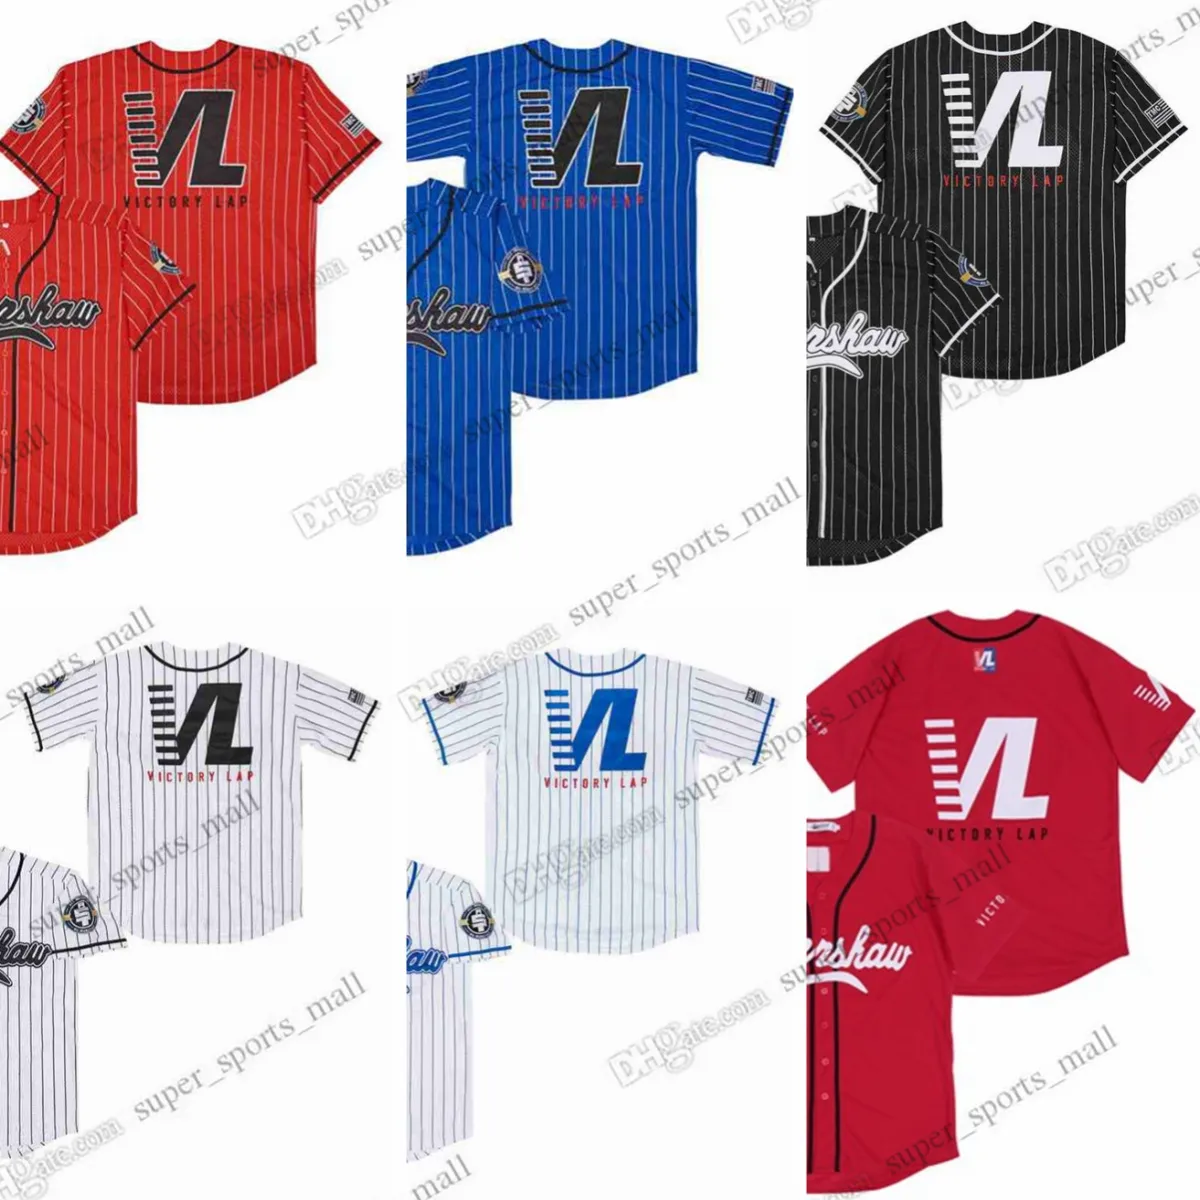 Camisas de beisebol do filme Nipsey Hussle Victorylap Crenshaw vl Camisa Masculina S-3XL